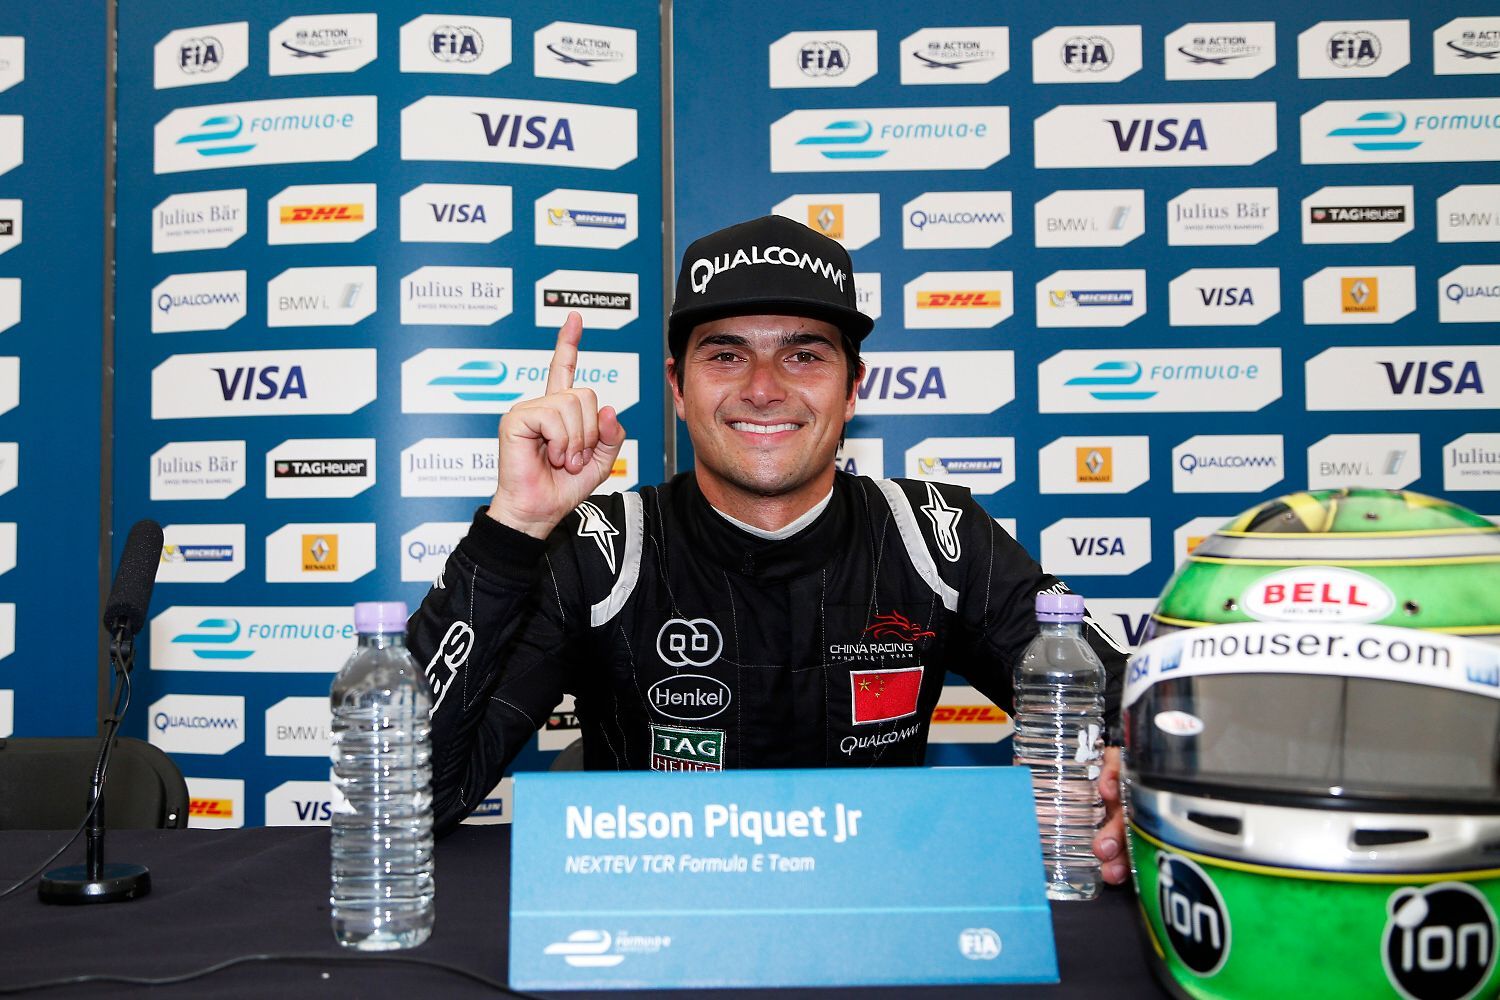 Formule E 2015 - Nelspon Piquet junior